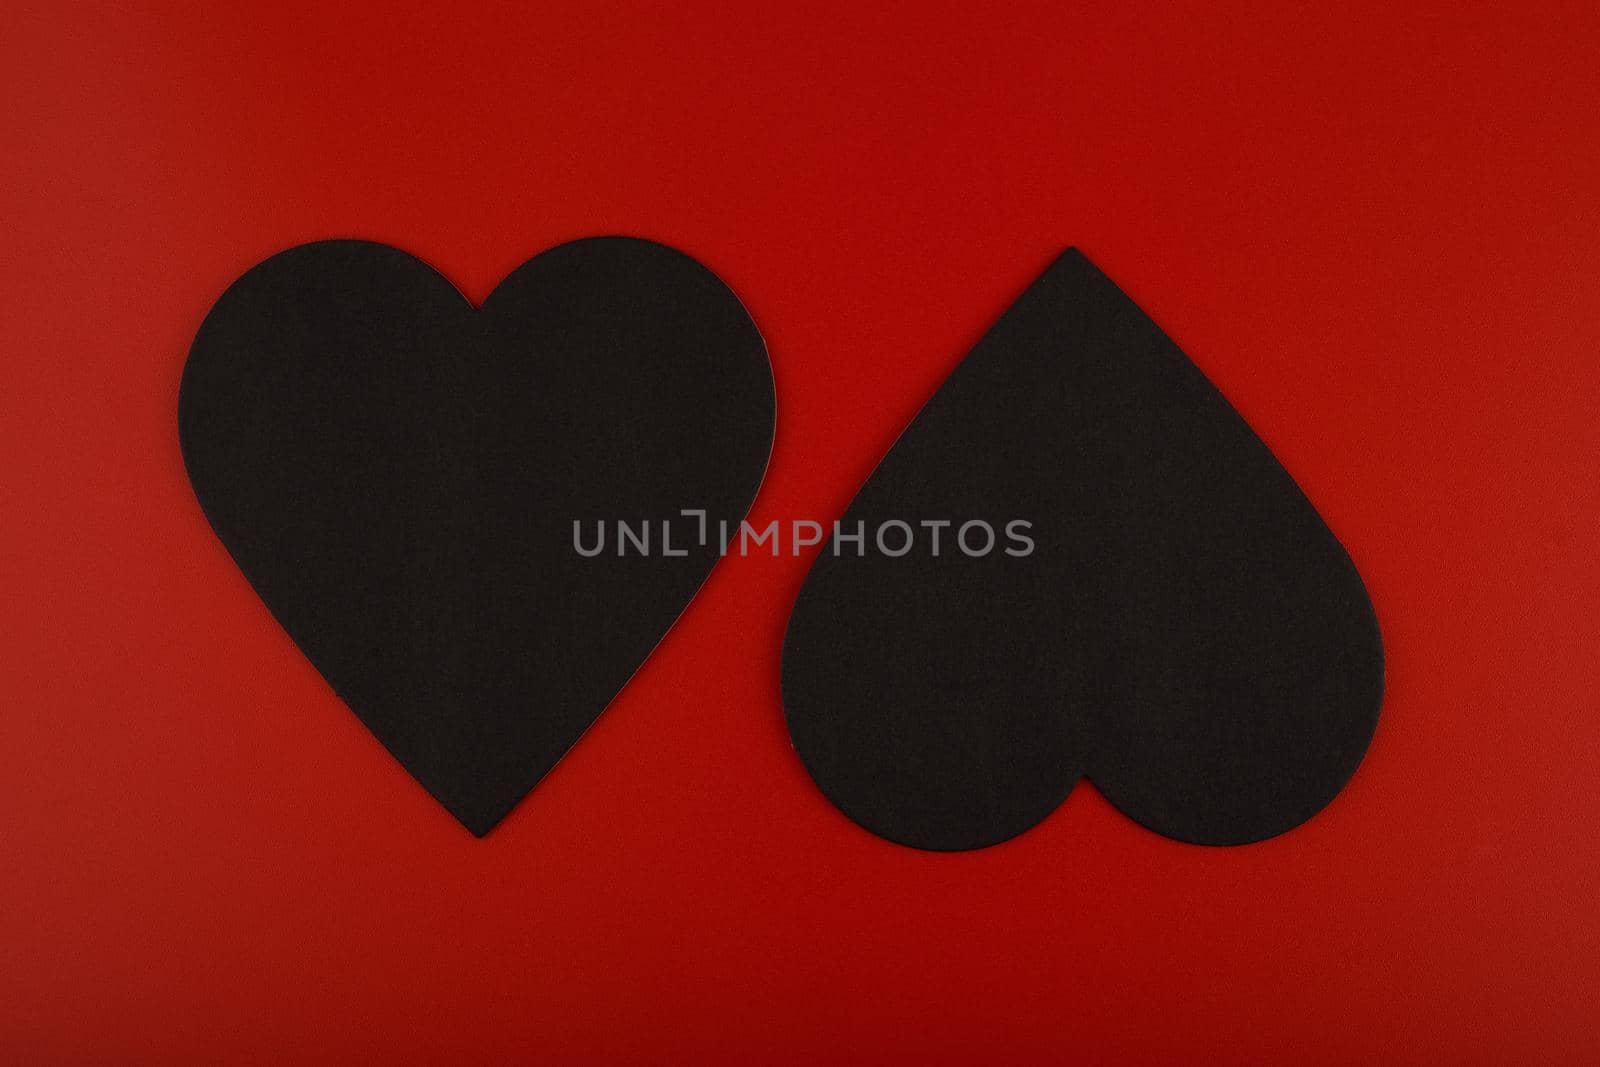 Two black hearts against red background by Senorina_Irina